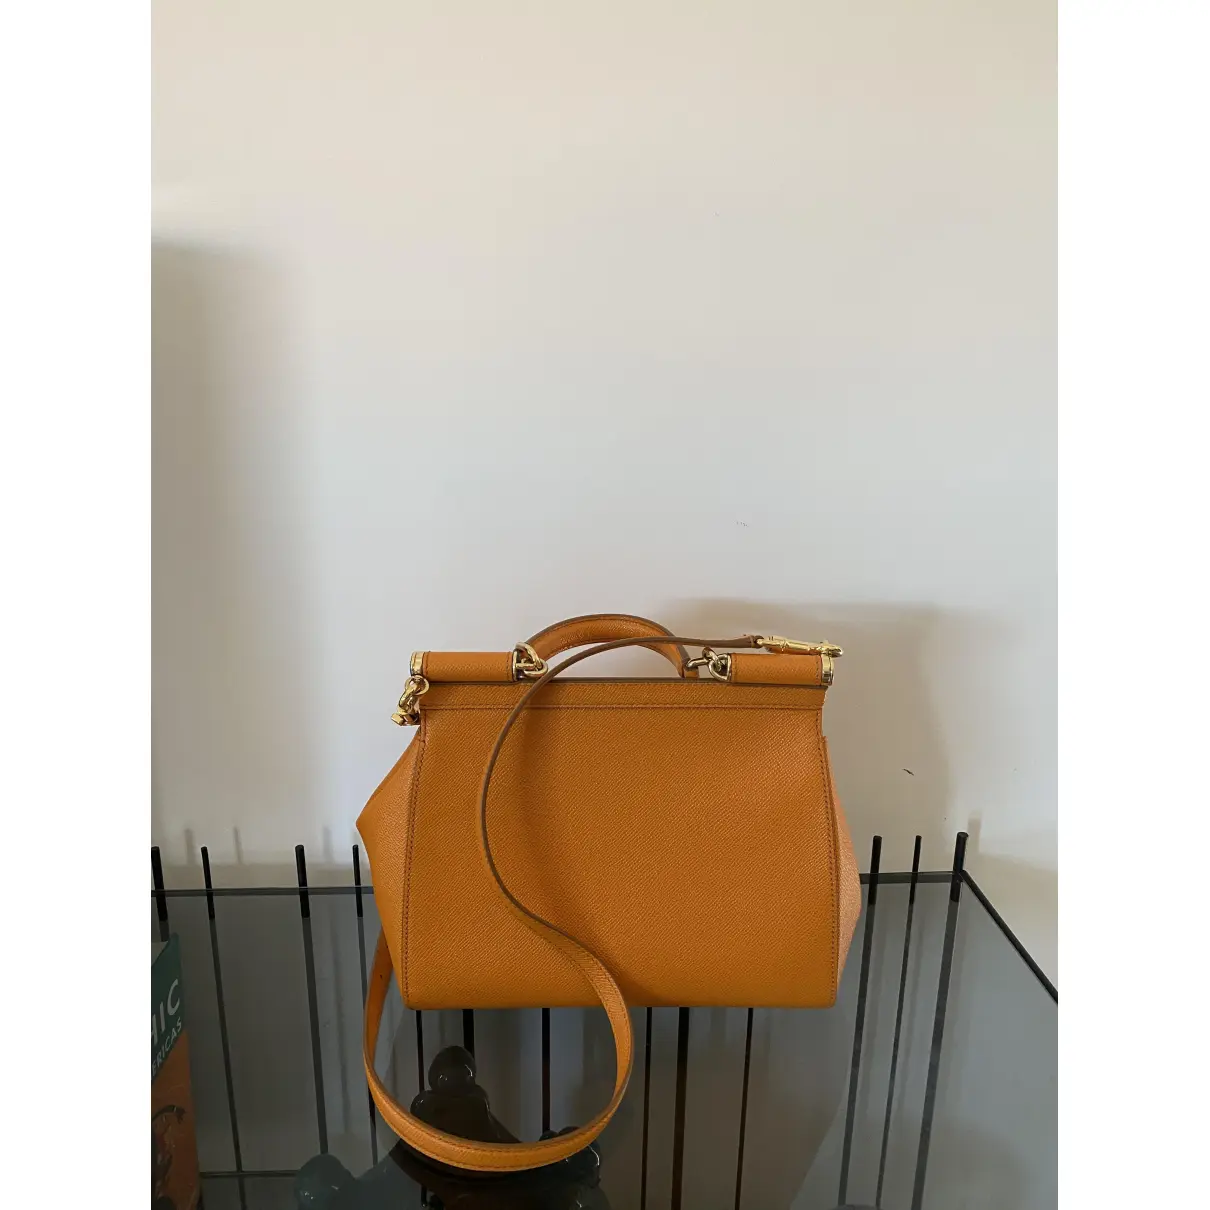 Buy Dolce & Gabbana Sicily leather handbag online